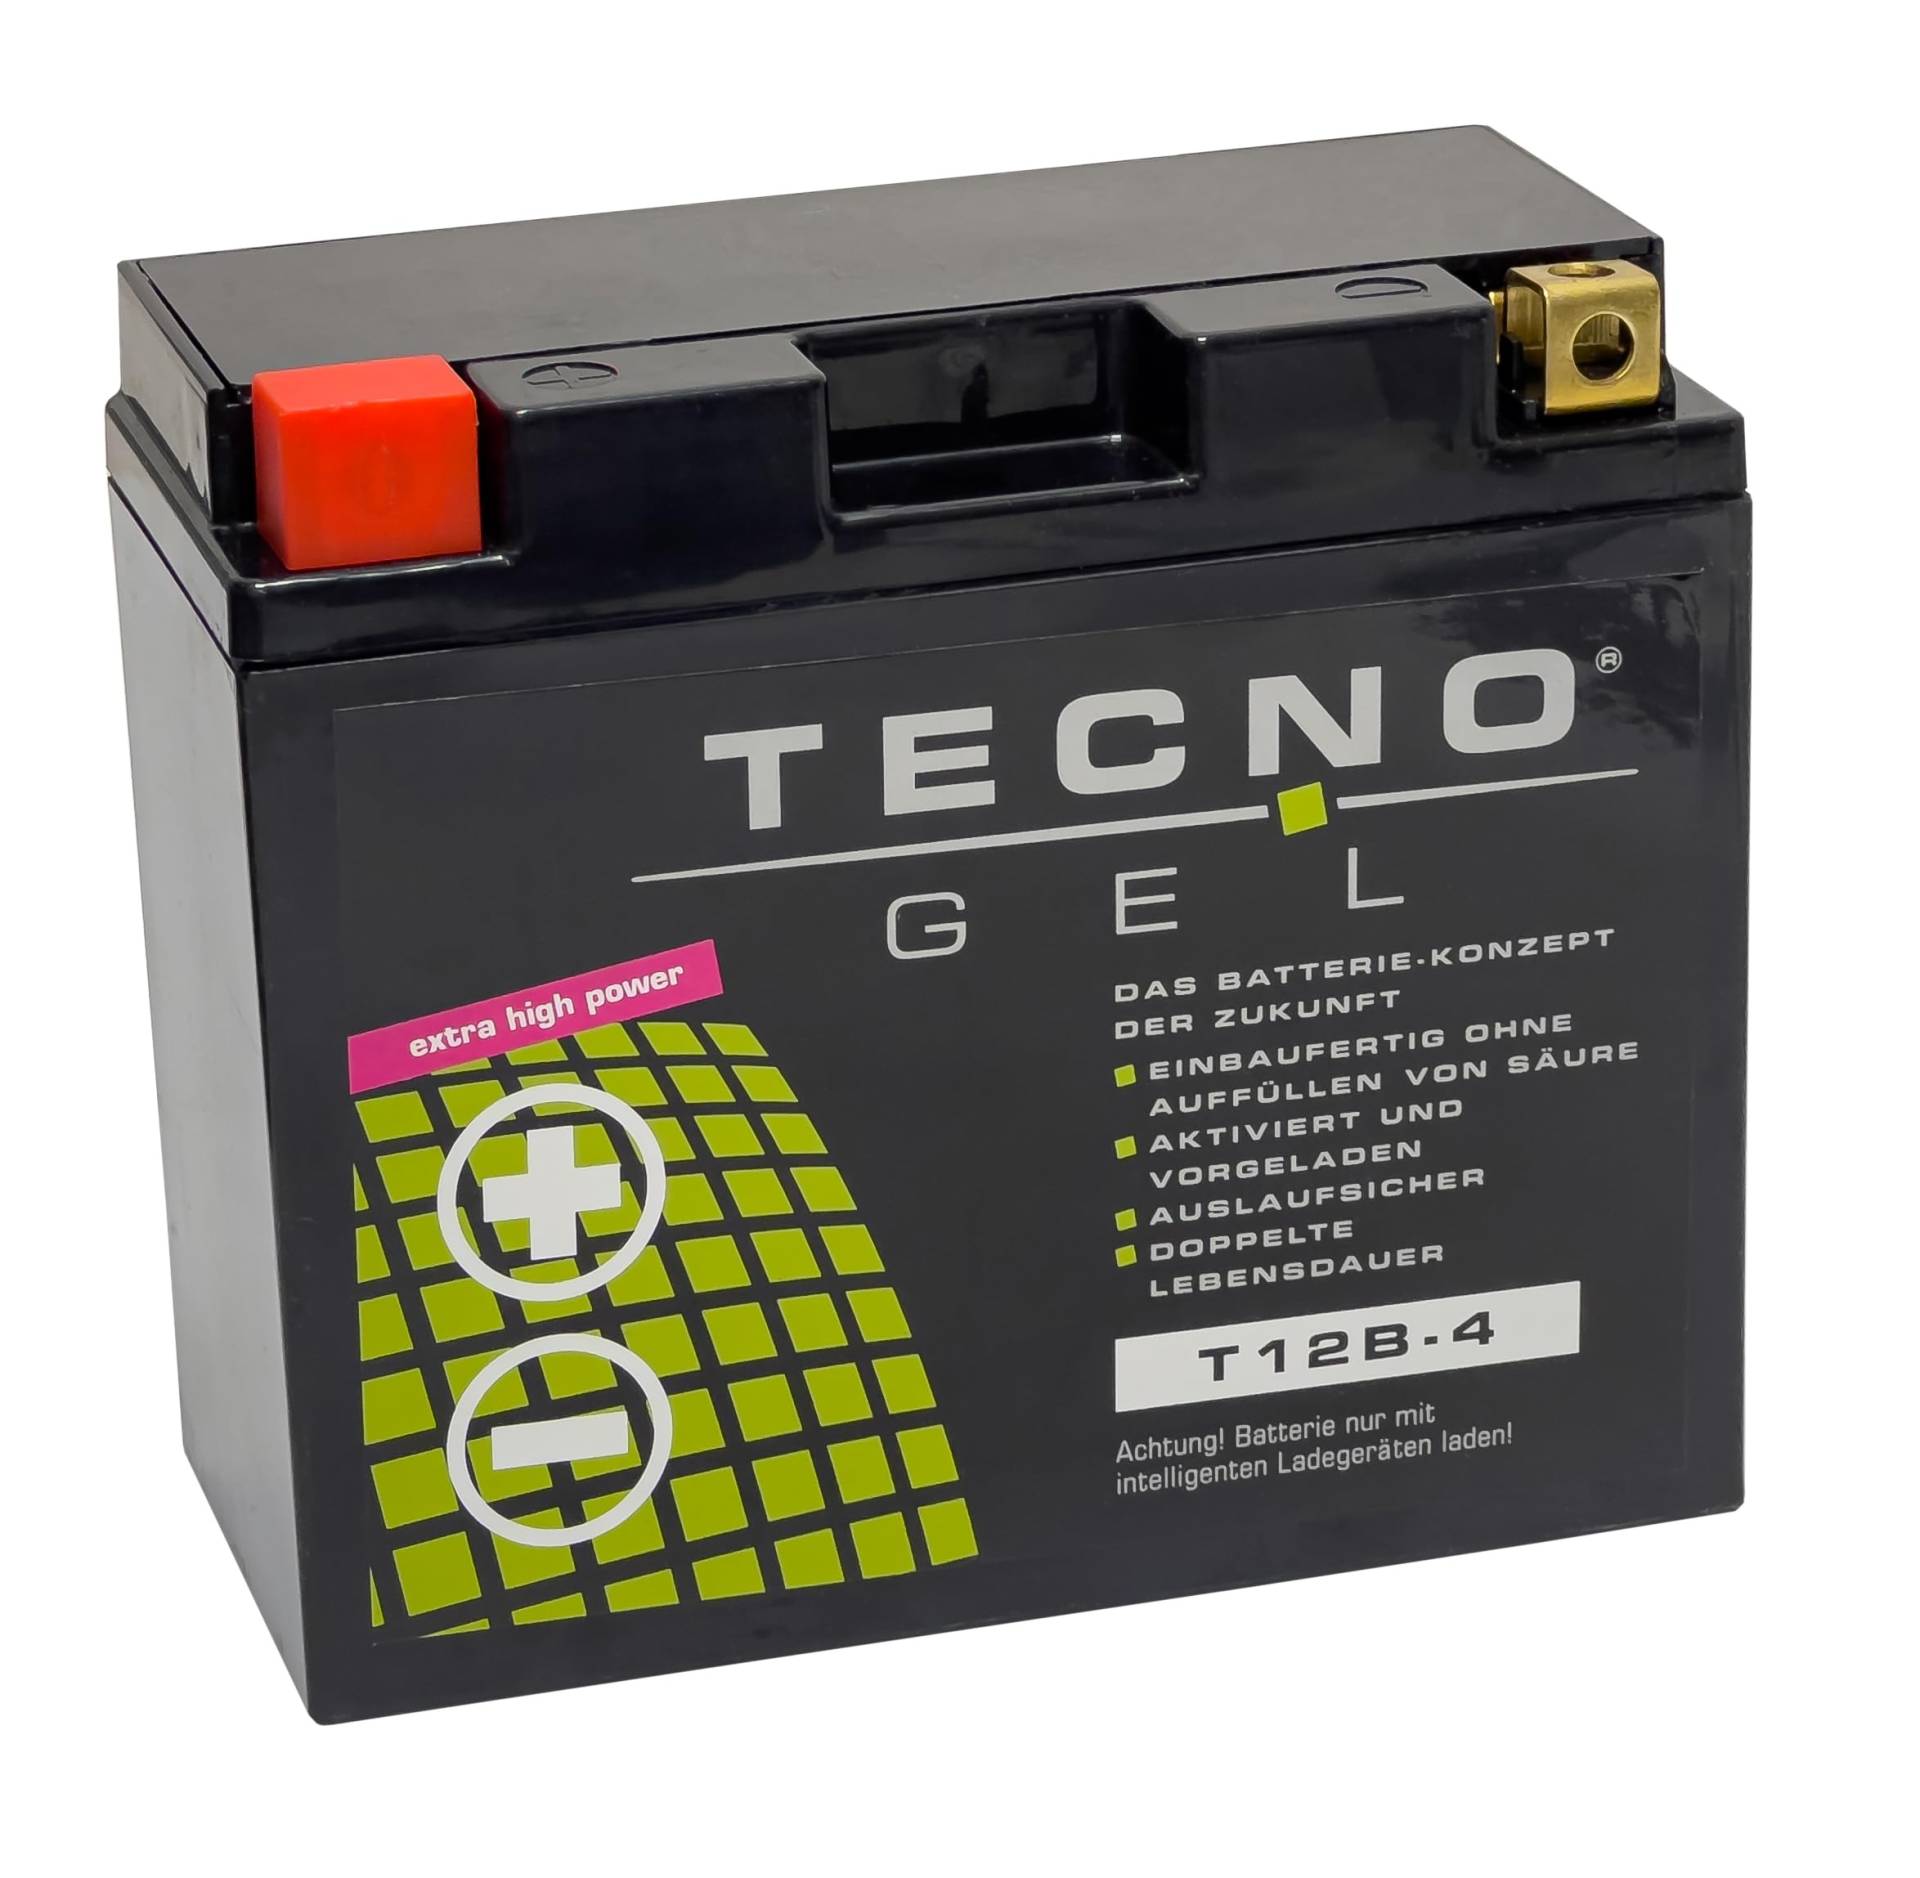 TECNO-GEL BATTERIE für YT12B-4 = YT12B-BS (DIN 51290) für Ducati Multistrada 950/1200/DS u.a. von Wirth-Federn